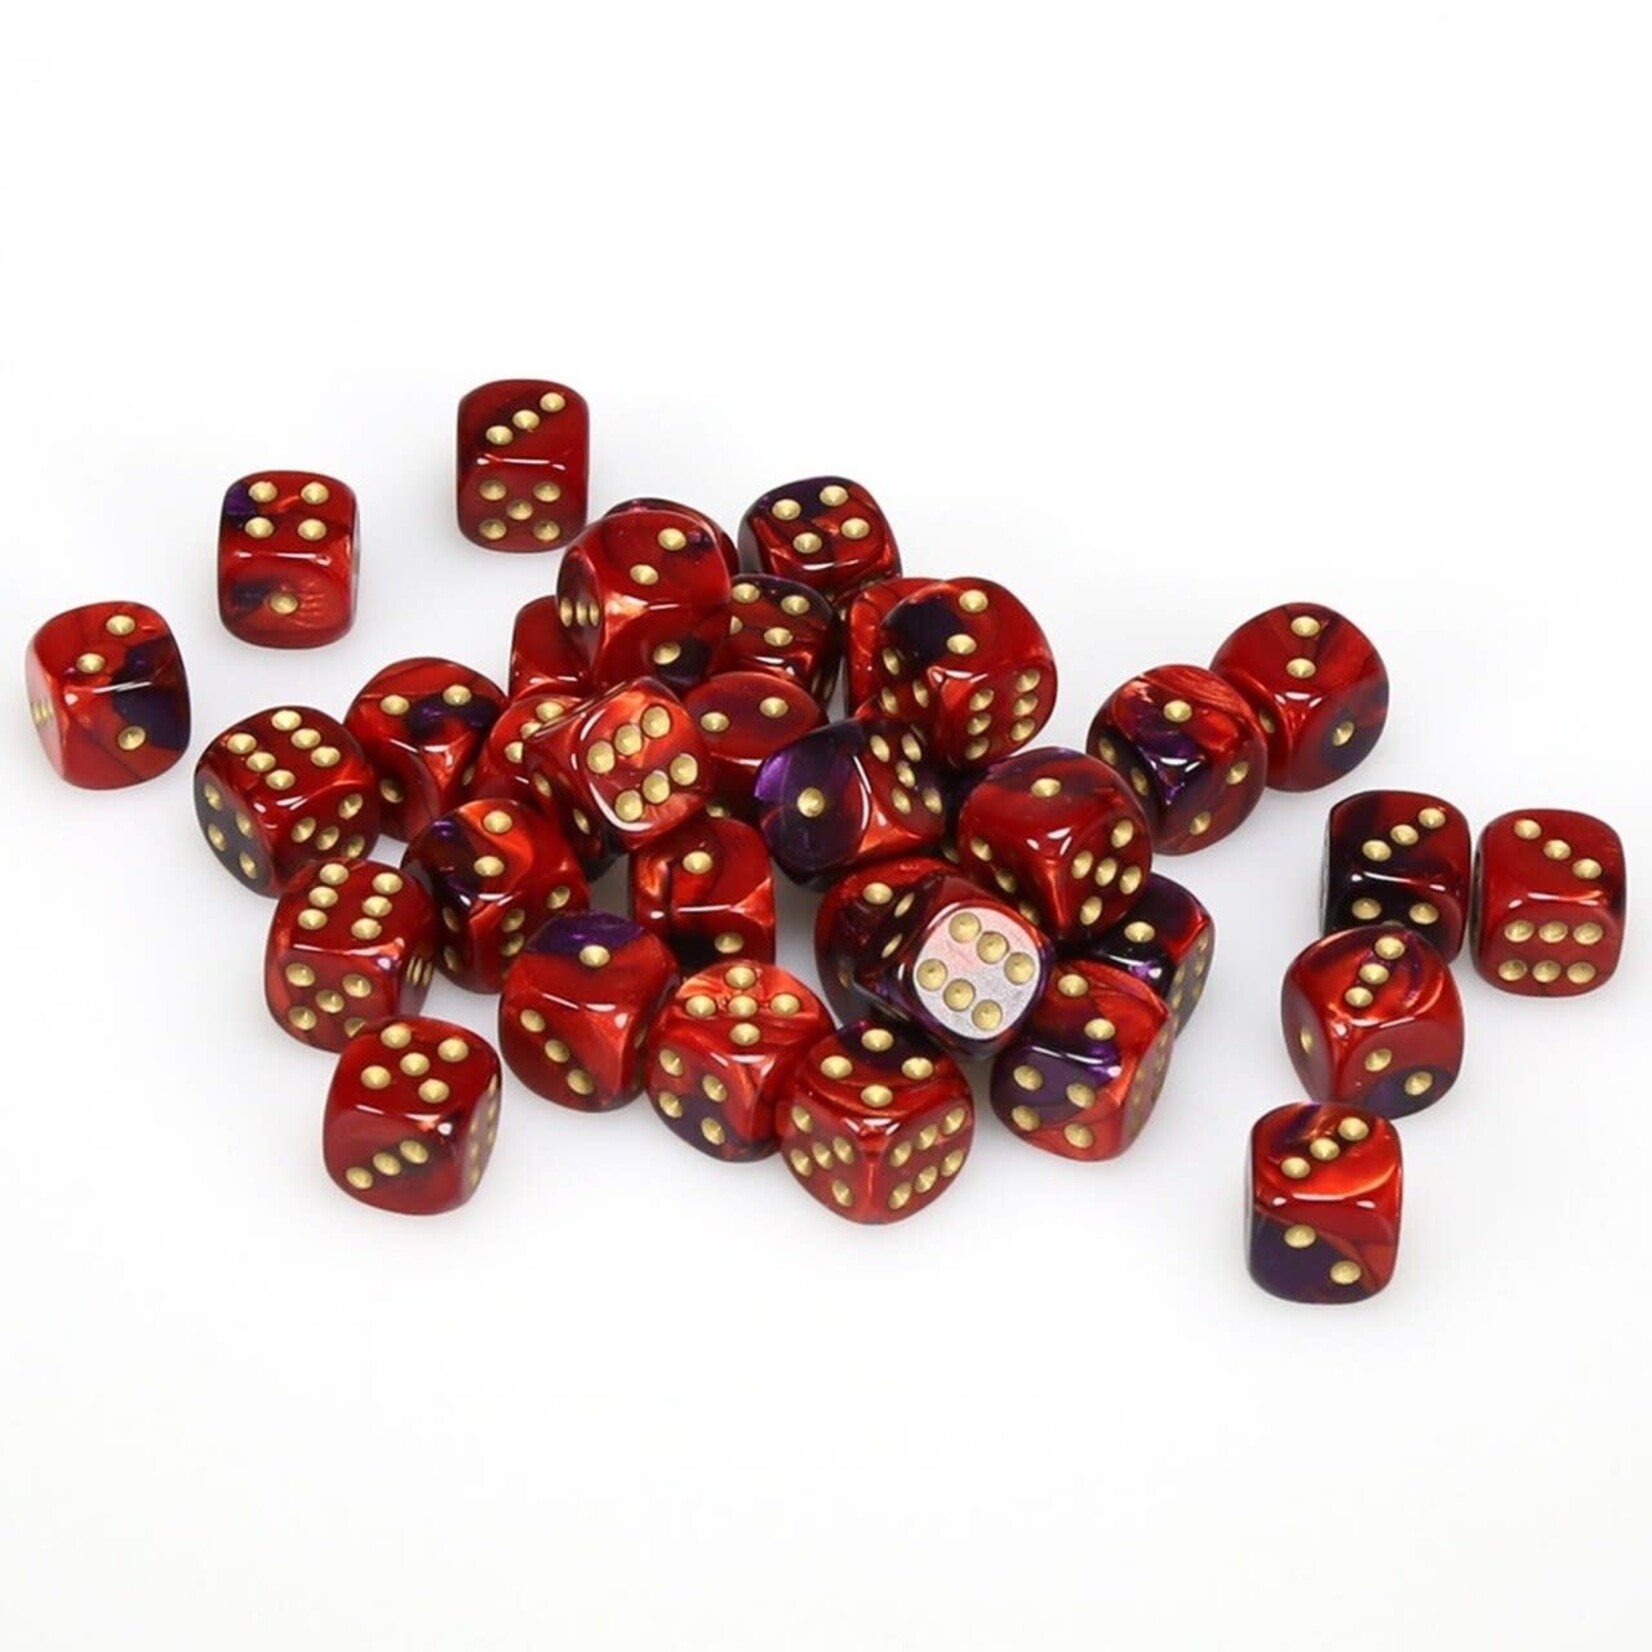 Chessex Gemini Purple-Red/gold 12mm d6 Dice Block (36 dice)